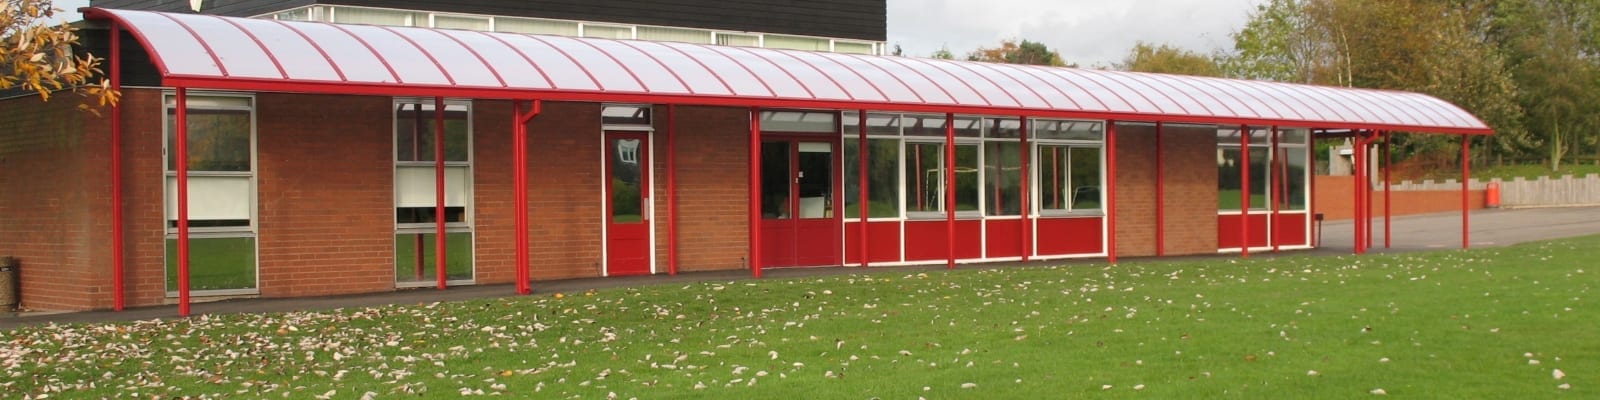 Tibberton Primary School Shelter